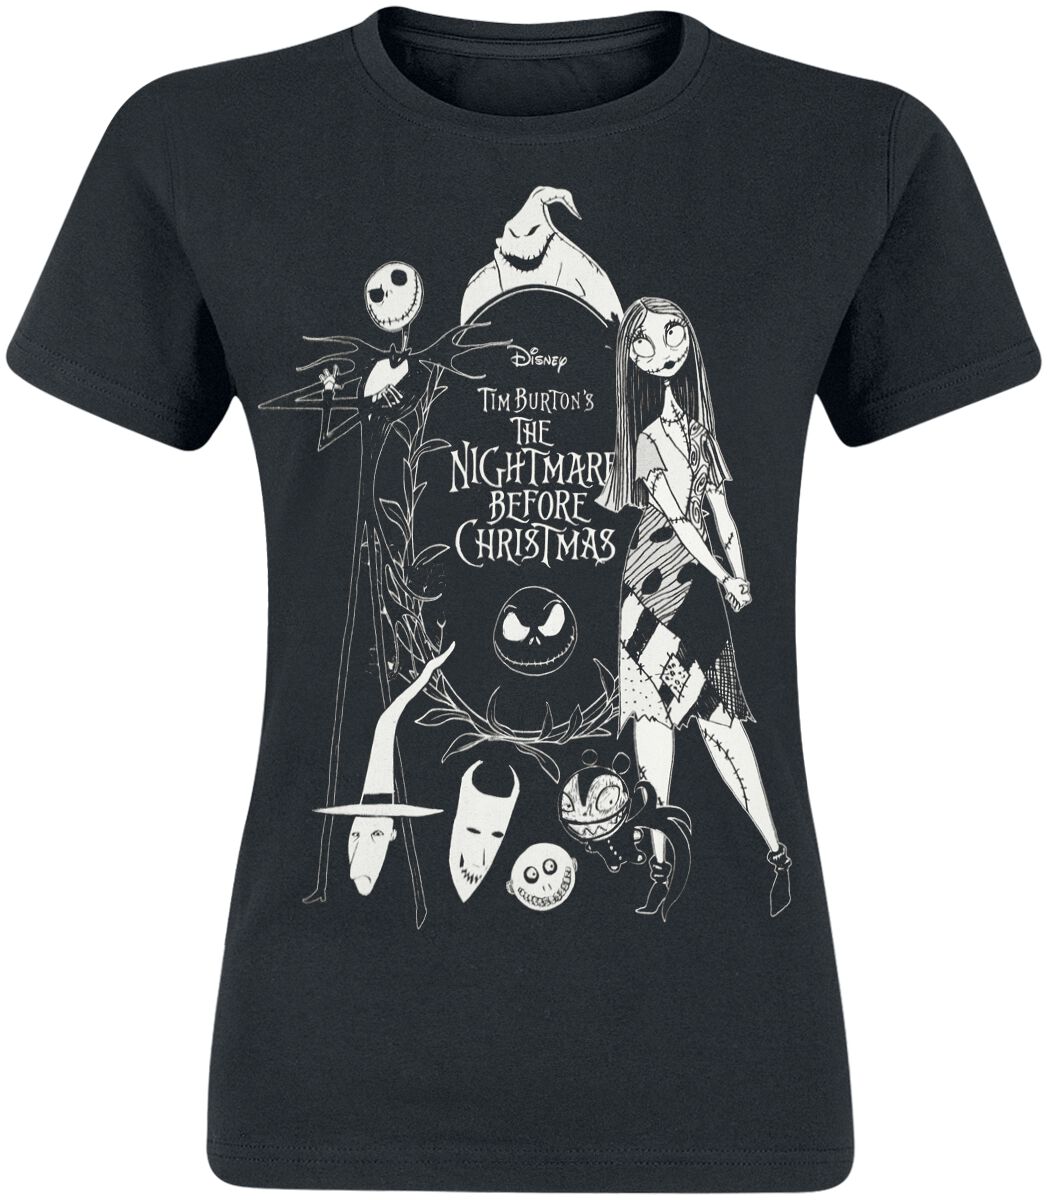 The Nightmare Before Christmas Nightmare Band T-Shirt schwarz in XXL